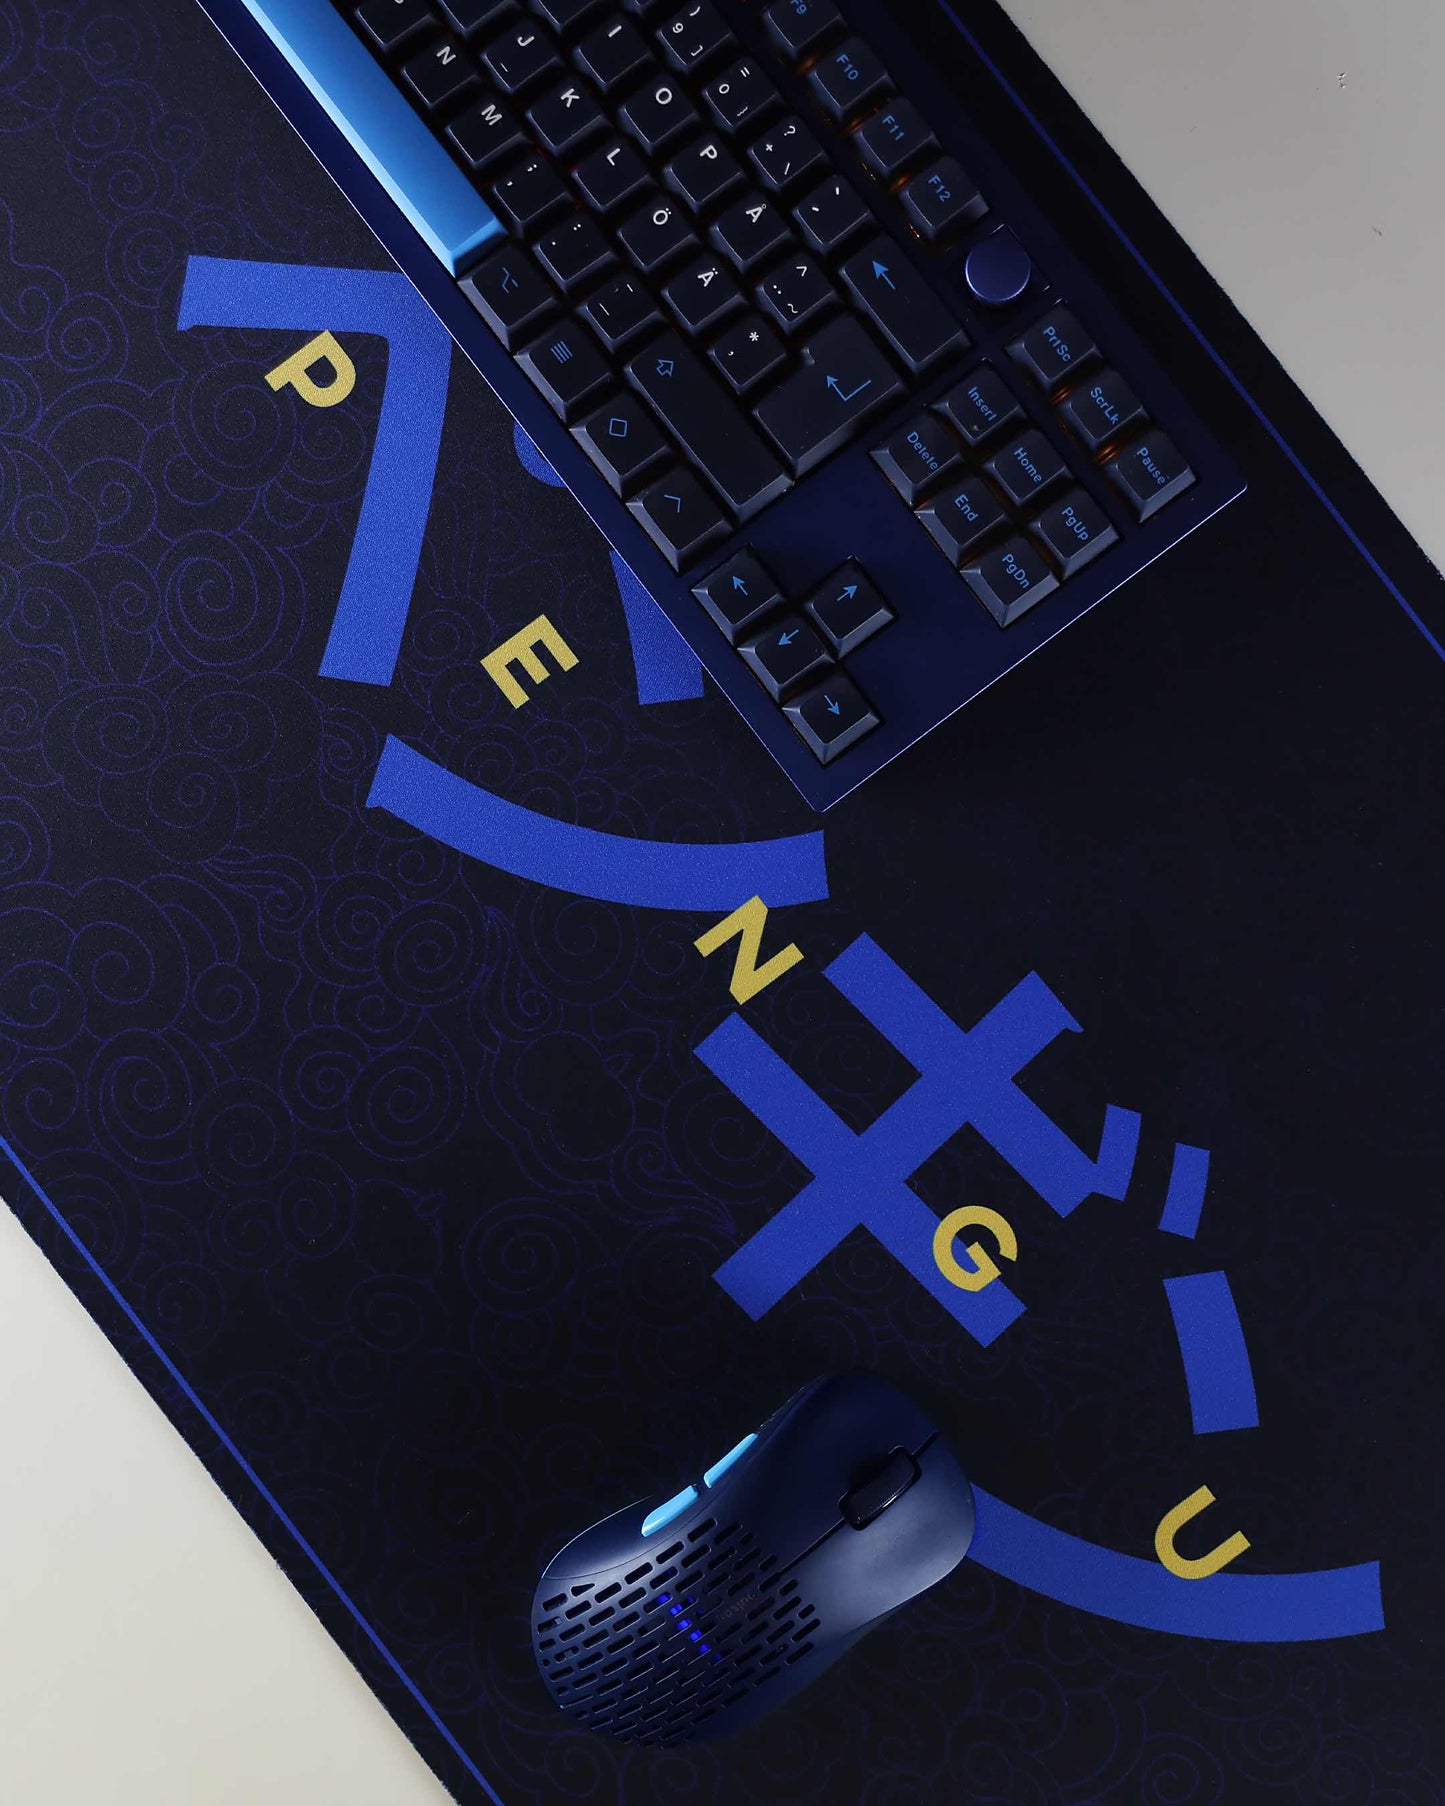 SOKU X Pengu Limited Edition Deskpad